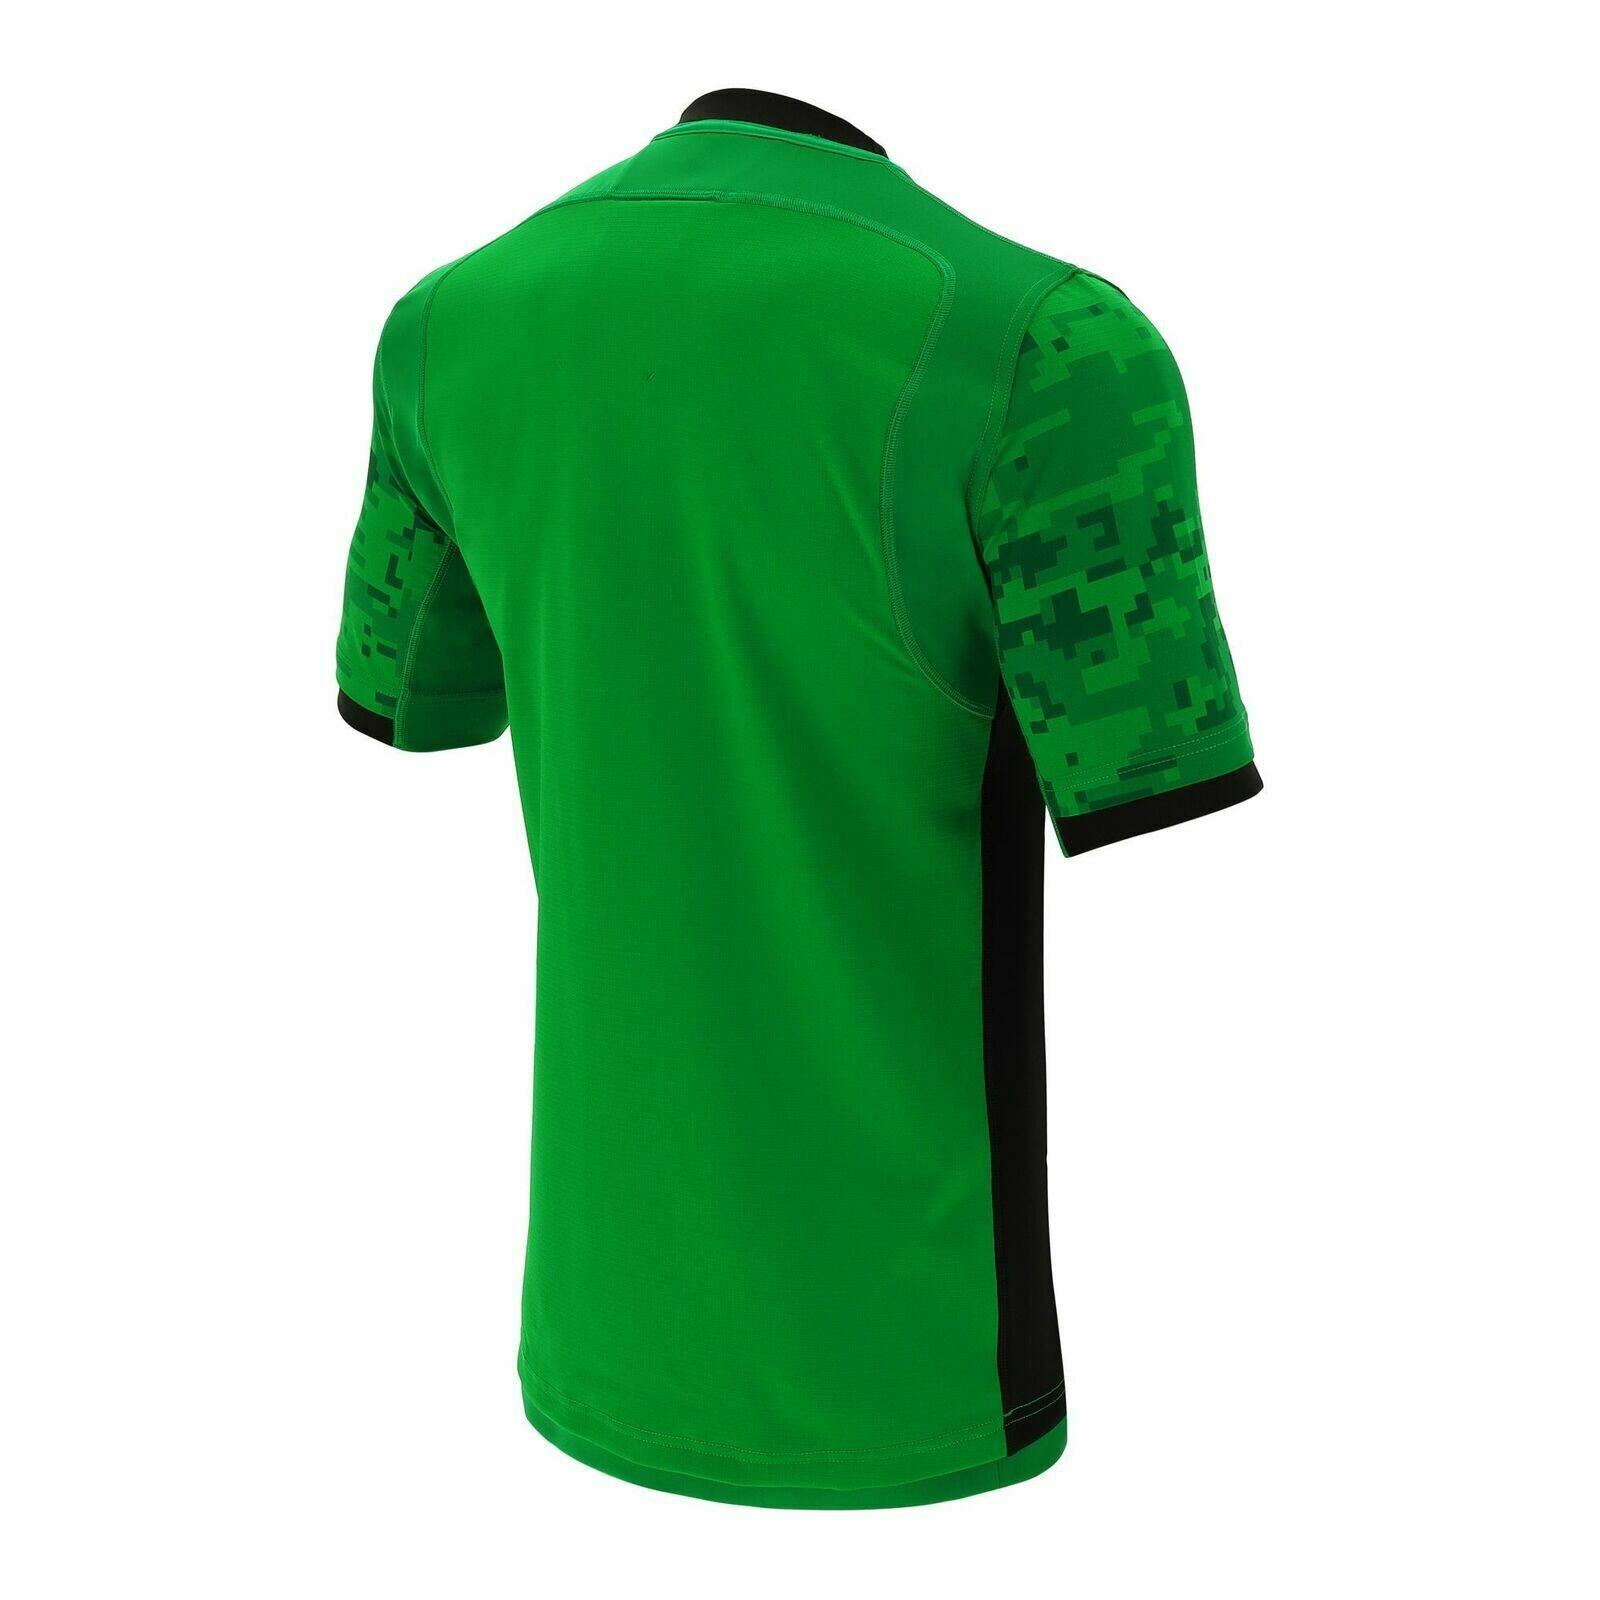 Macron Wales WRU Training Rugby Shirt Adults 58125902 Green 2/4